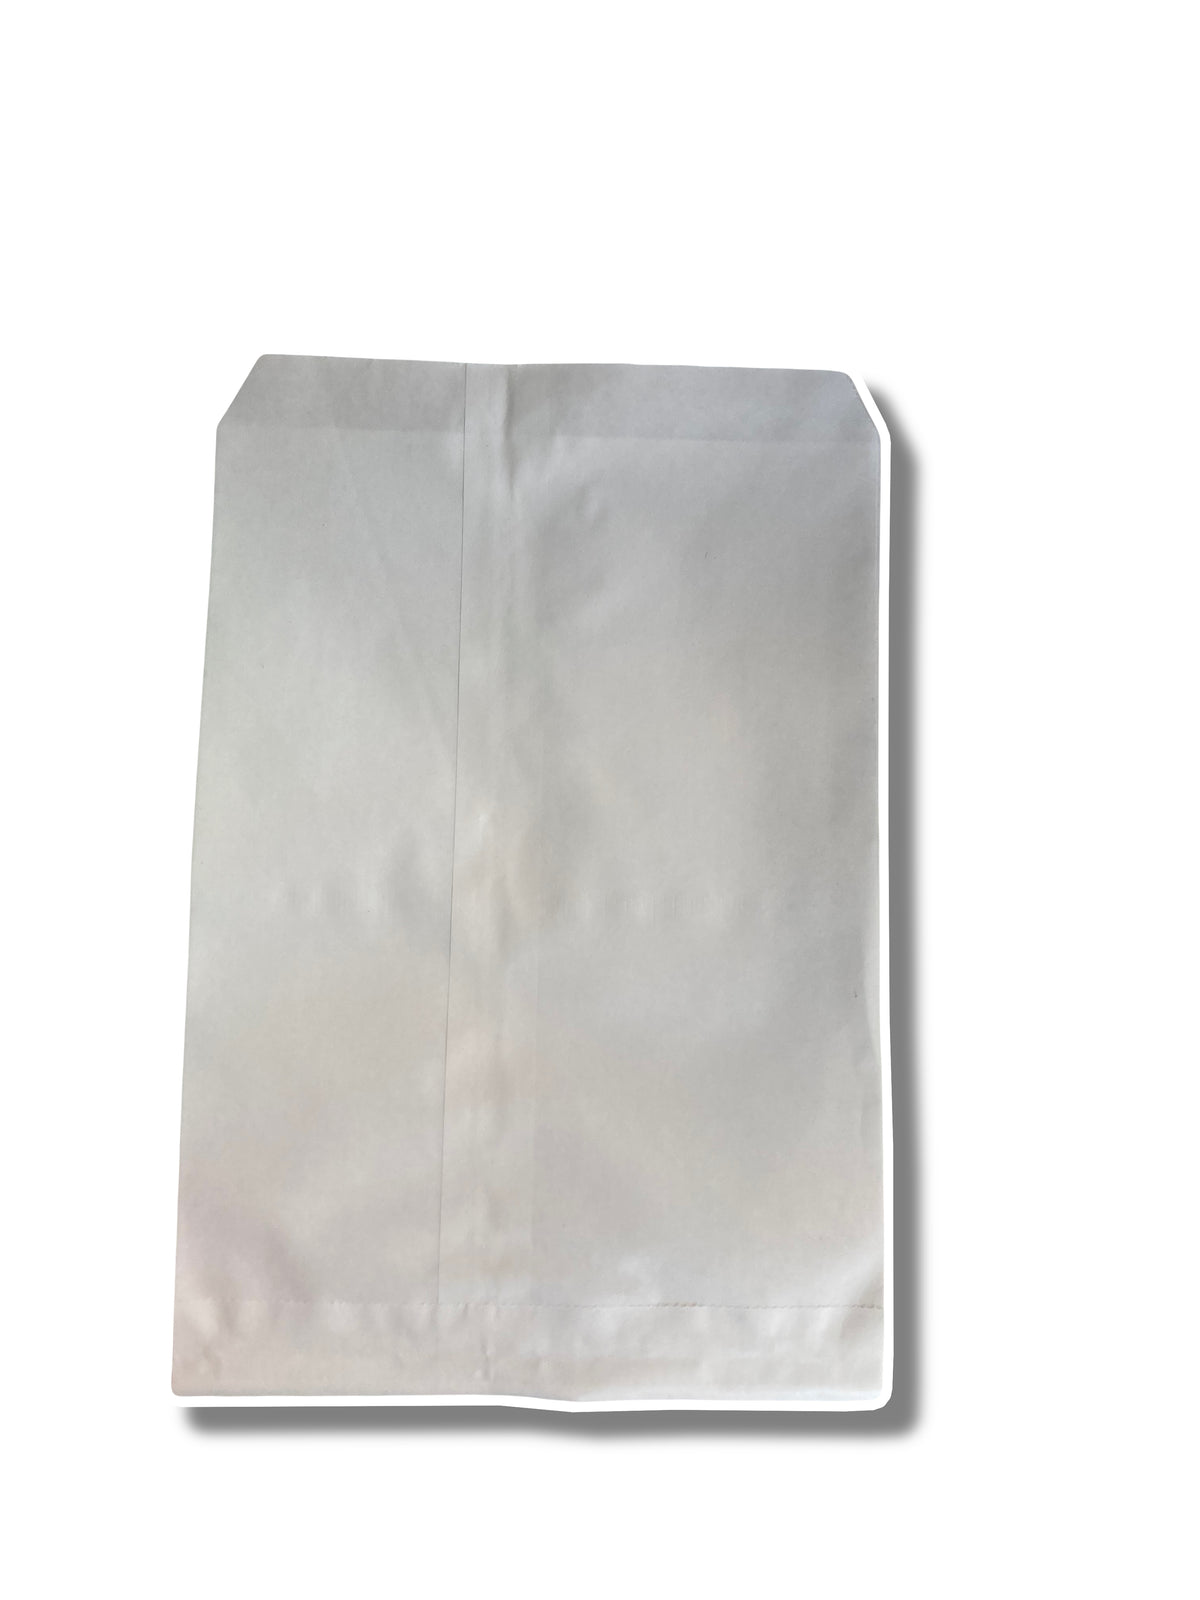 Plain White Paper Bag